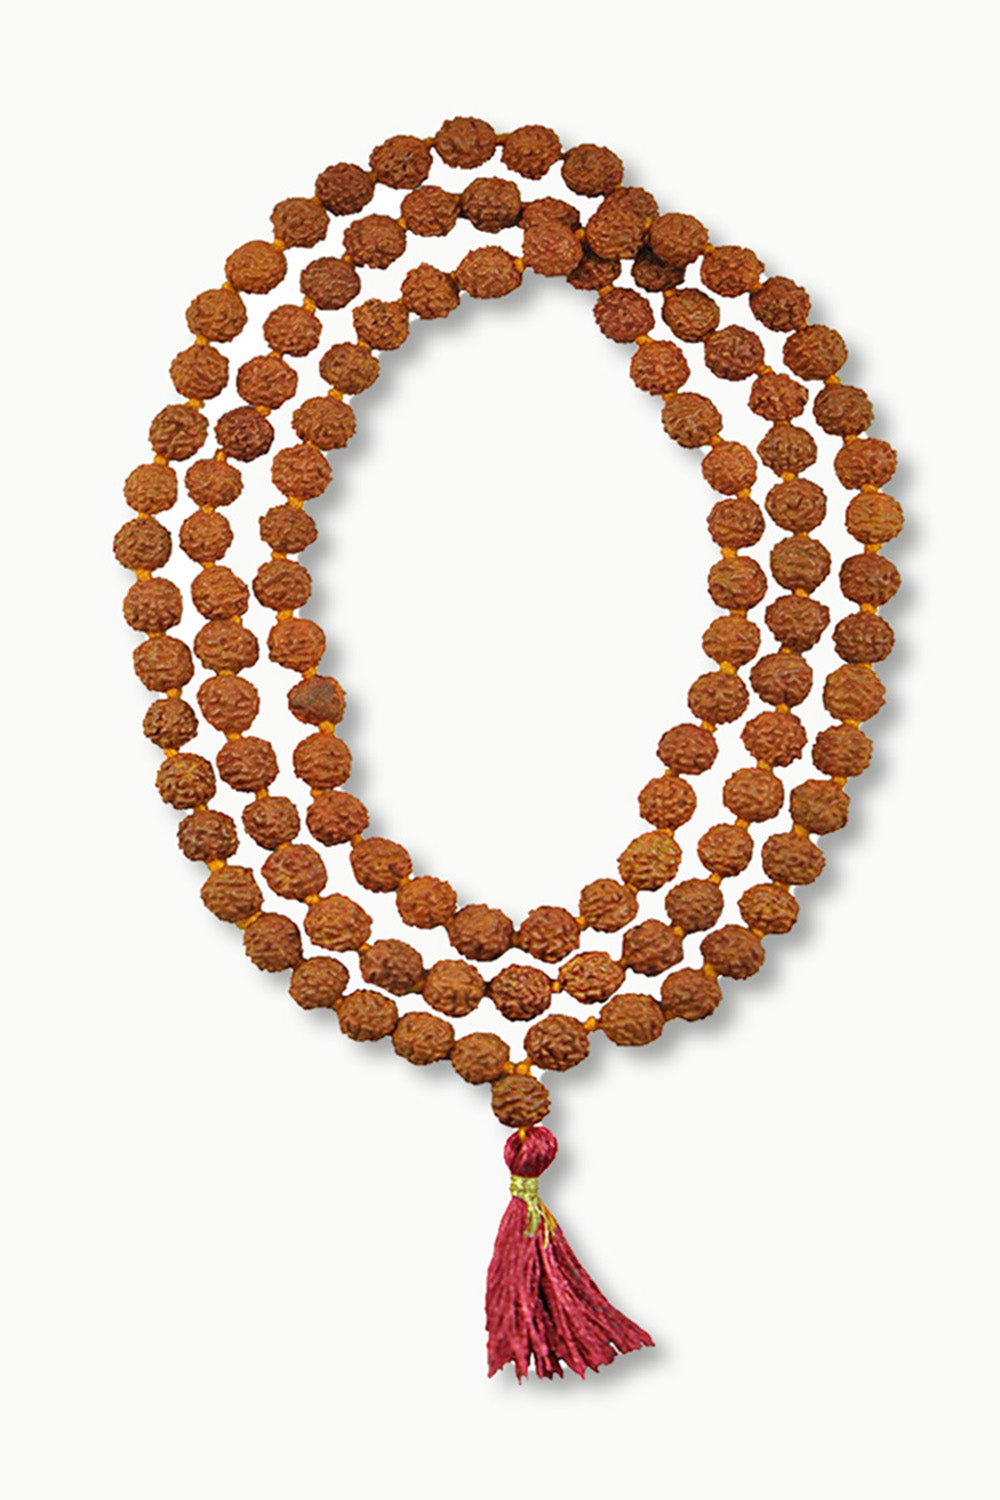 Rudraksha 108 Beads Knotted Meditation Mala